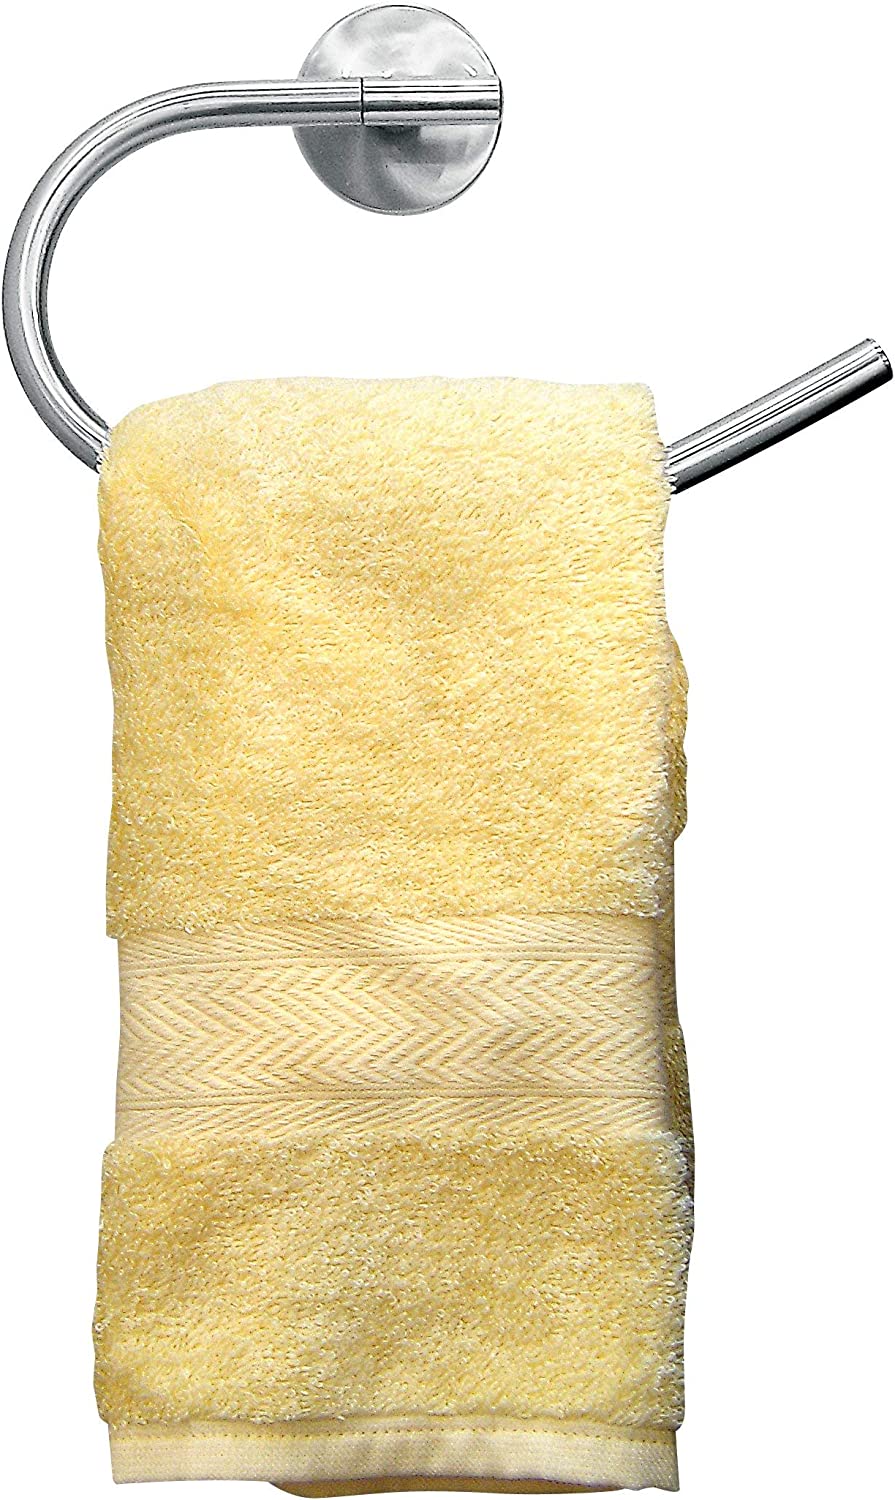 Handtuchring FUSION, vernickelter Handtuchhalter, Handtuchstange (Farbe: Silber), Menge: 1 Stück